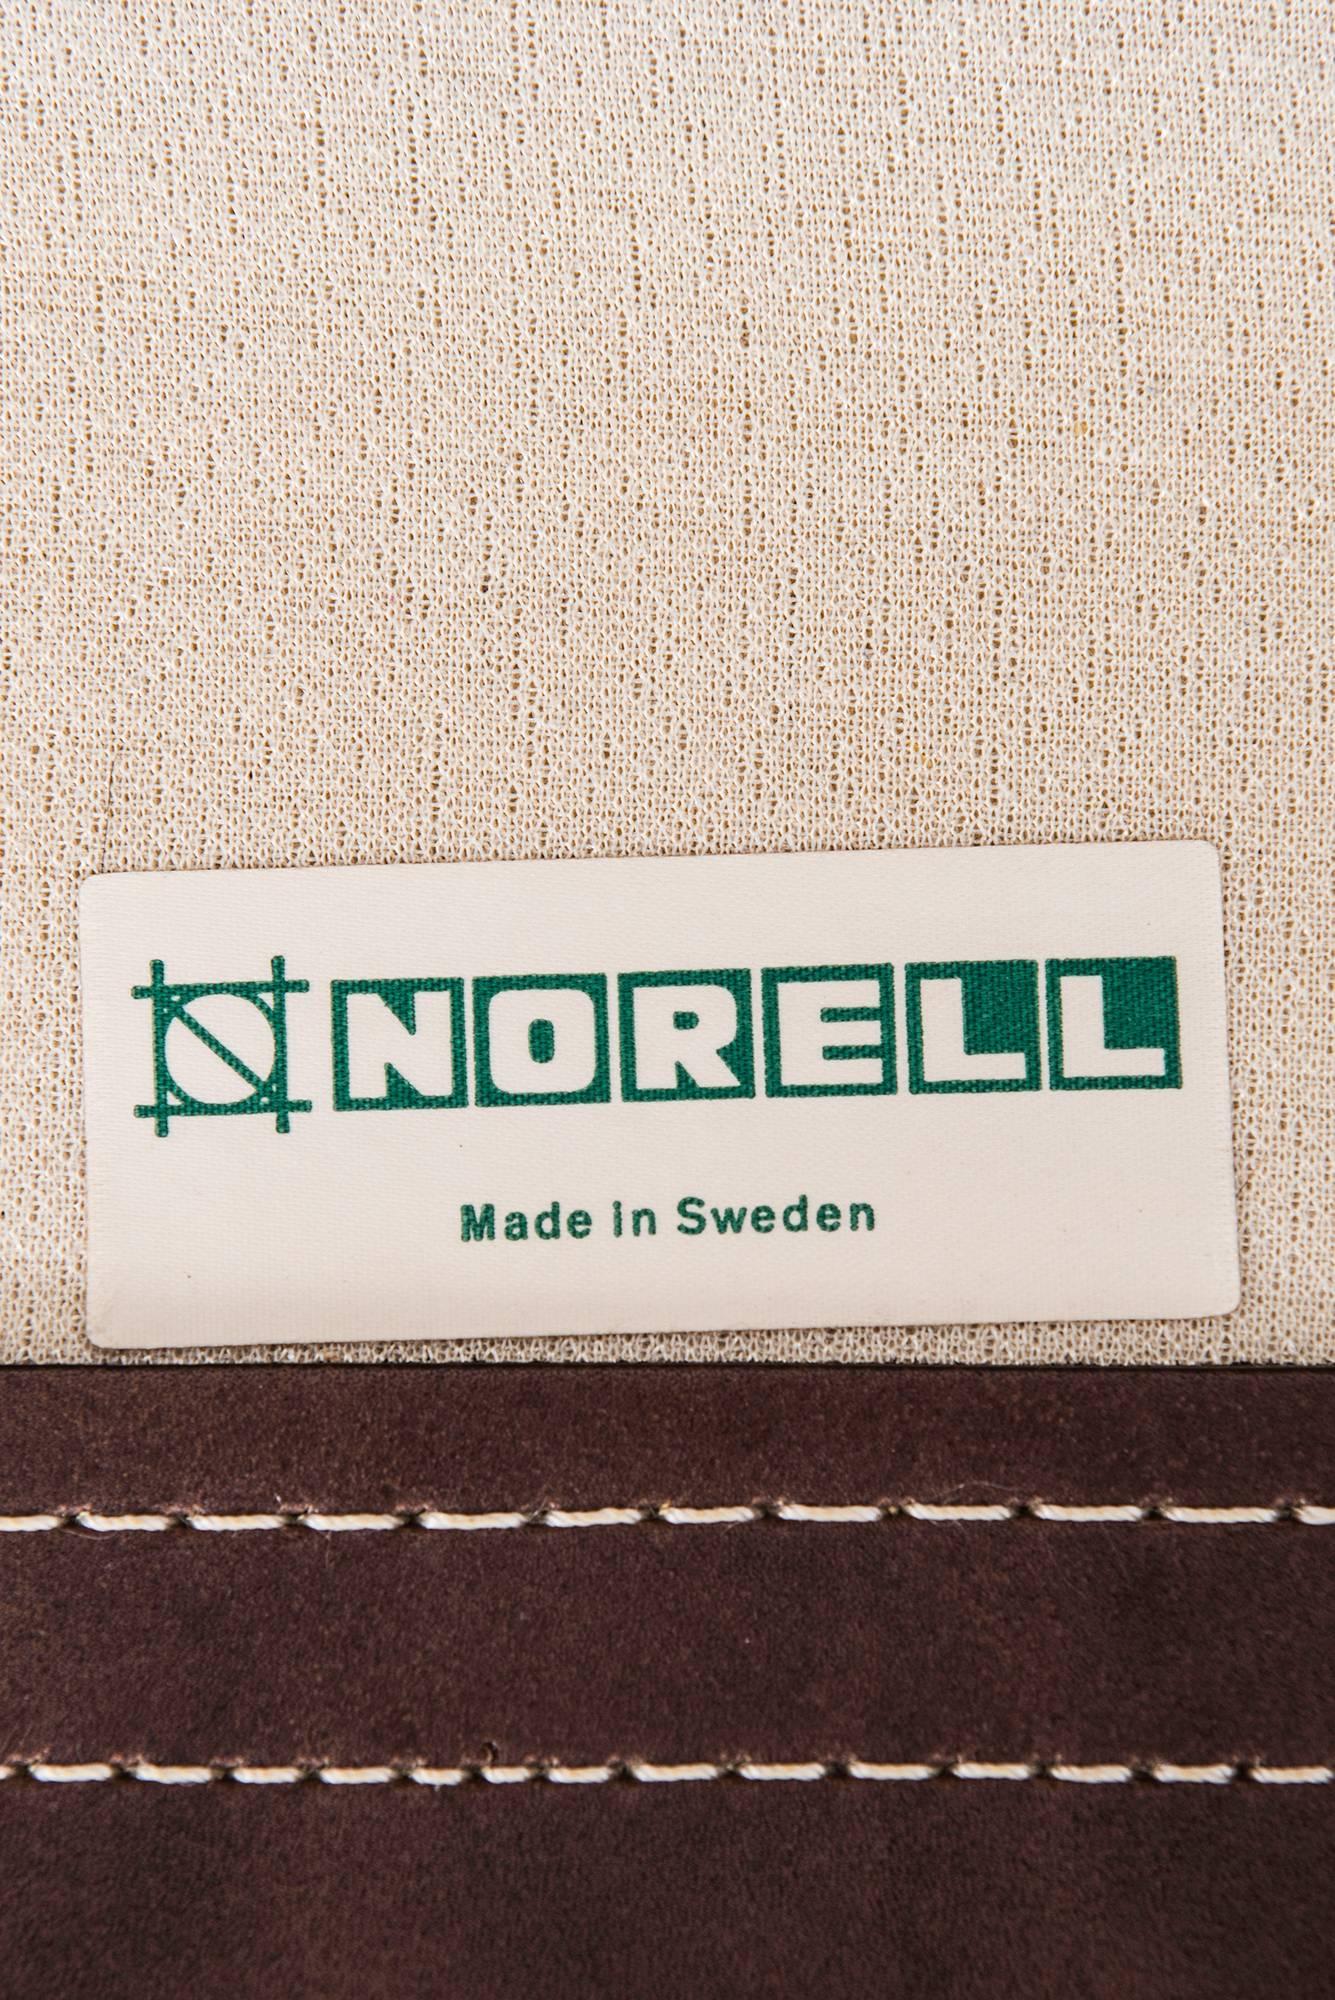 Arne Norell Sofa Model Kontiki by Arne Norell AB in Sweden 2